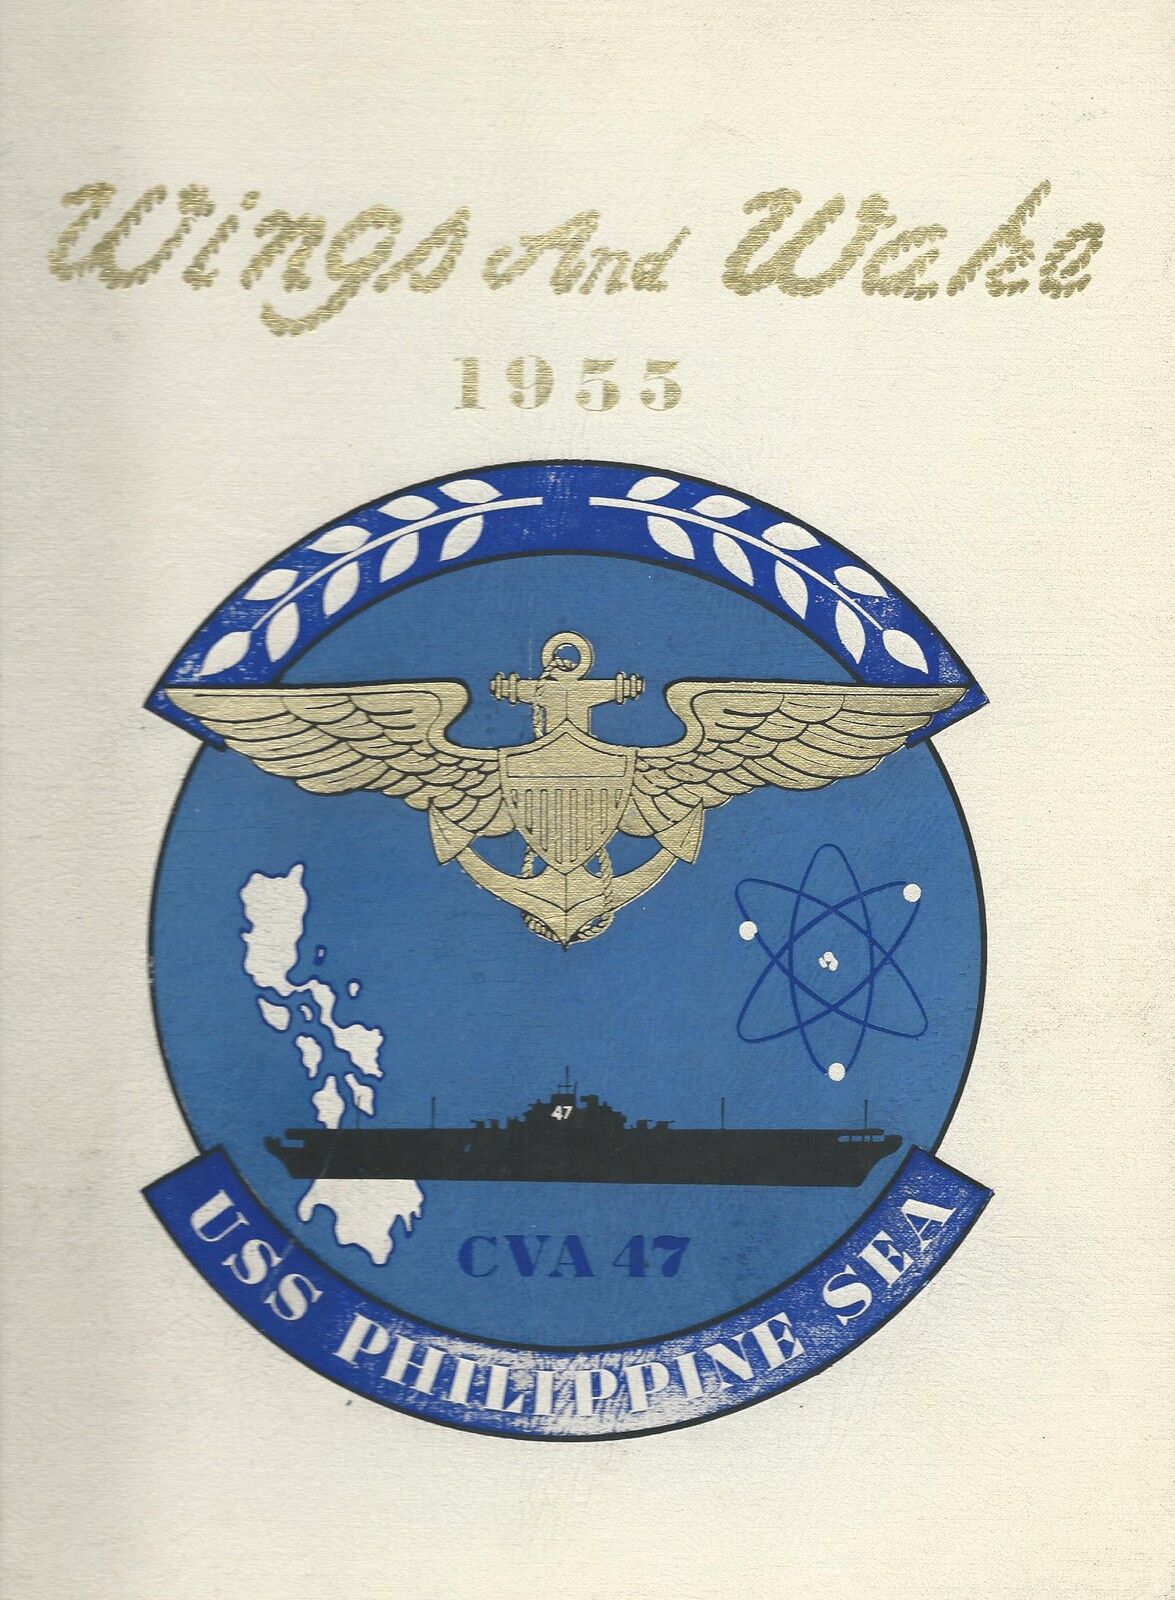 ☆*☆ USS PHILIPPINE SEA CVS-47 WESTPAC DEPLOYMENT CRUISE BOOK YEAR LOG 1955 ☆*☆ 